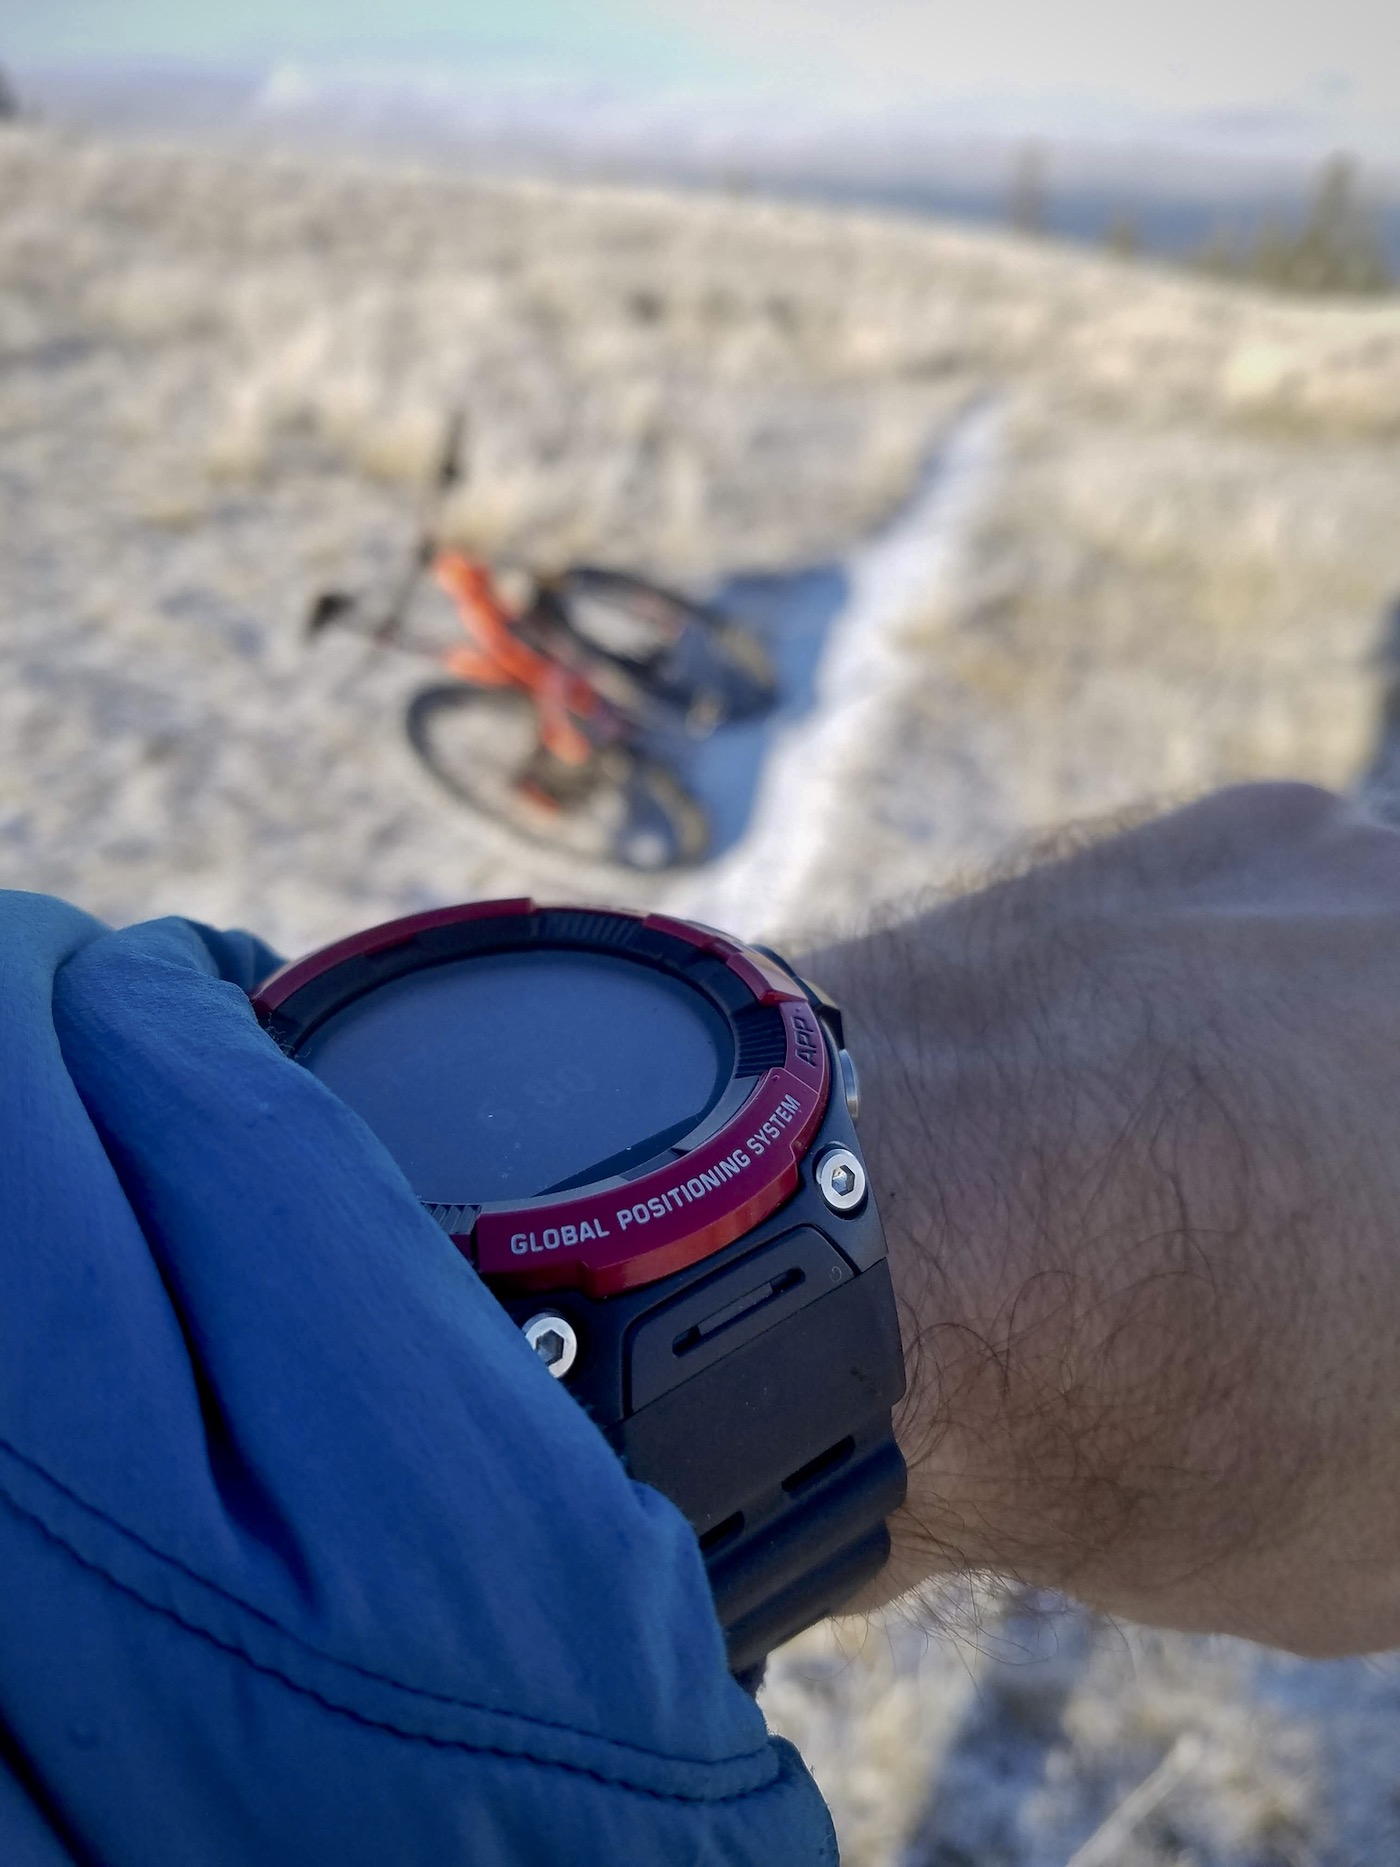 Casio Pro Trek WSD-F21 HR Watch Review Wrist Time Reviews 